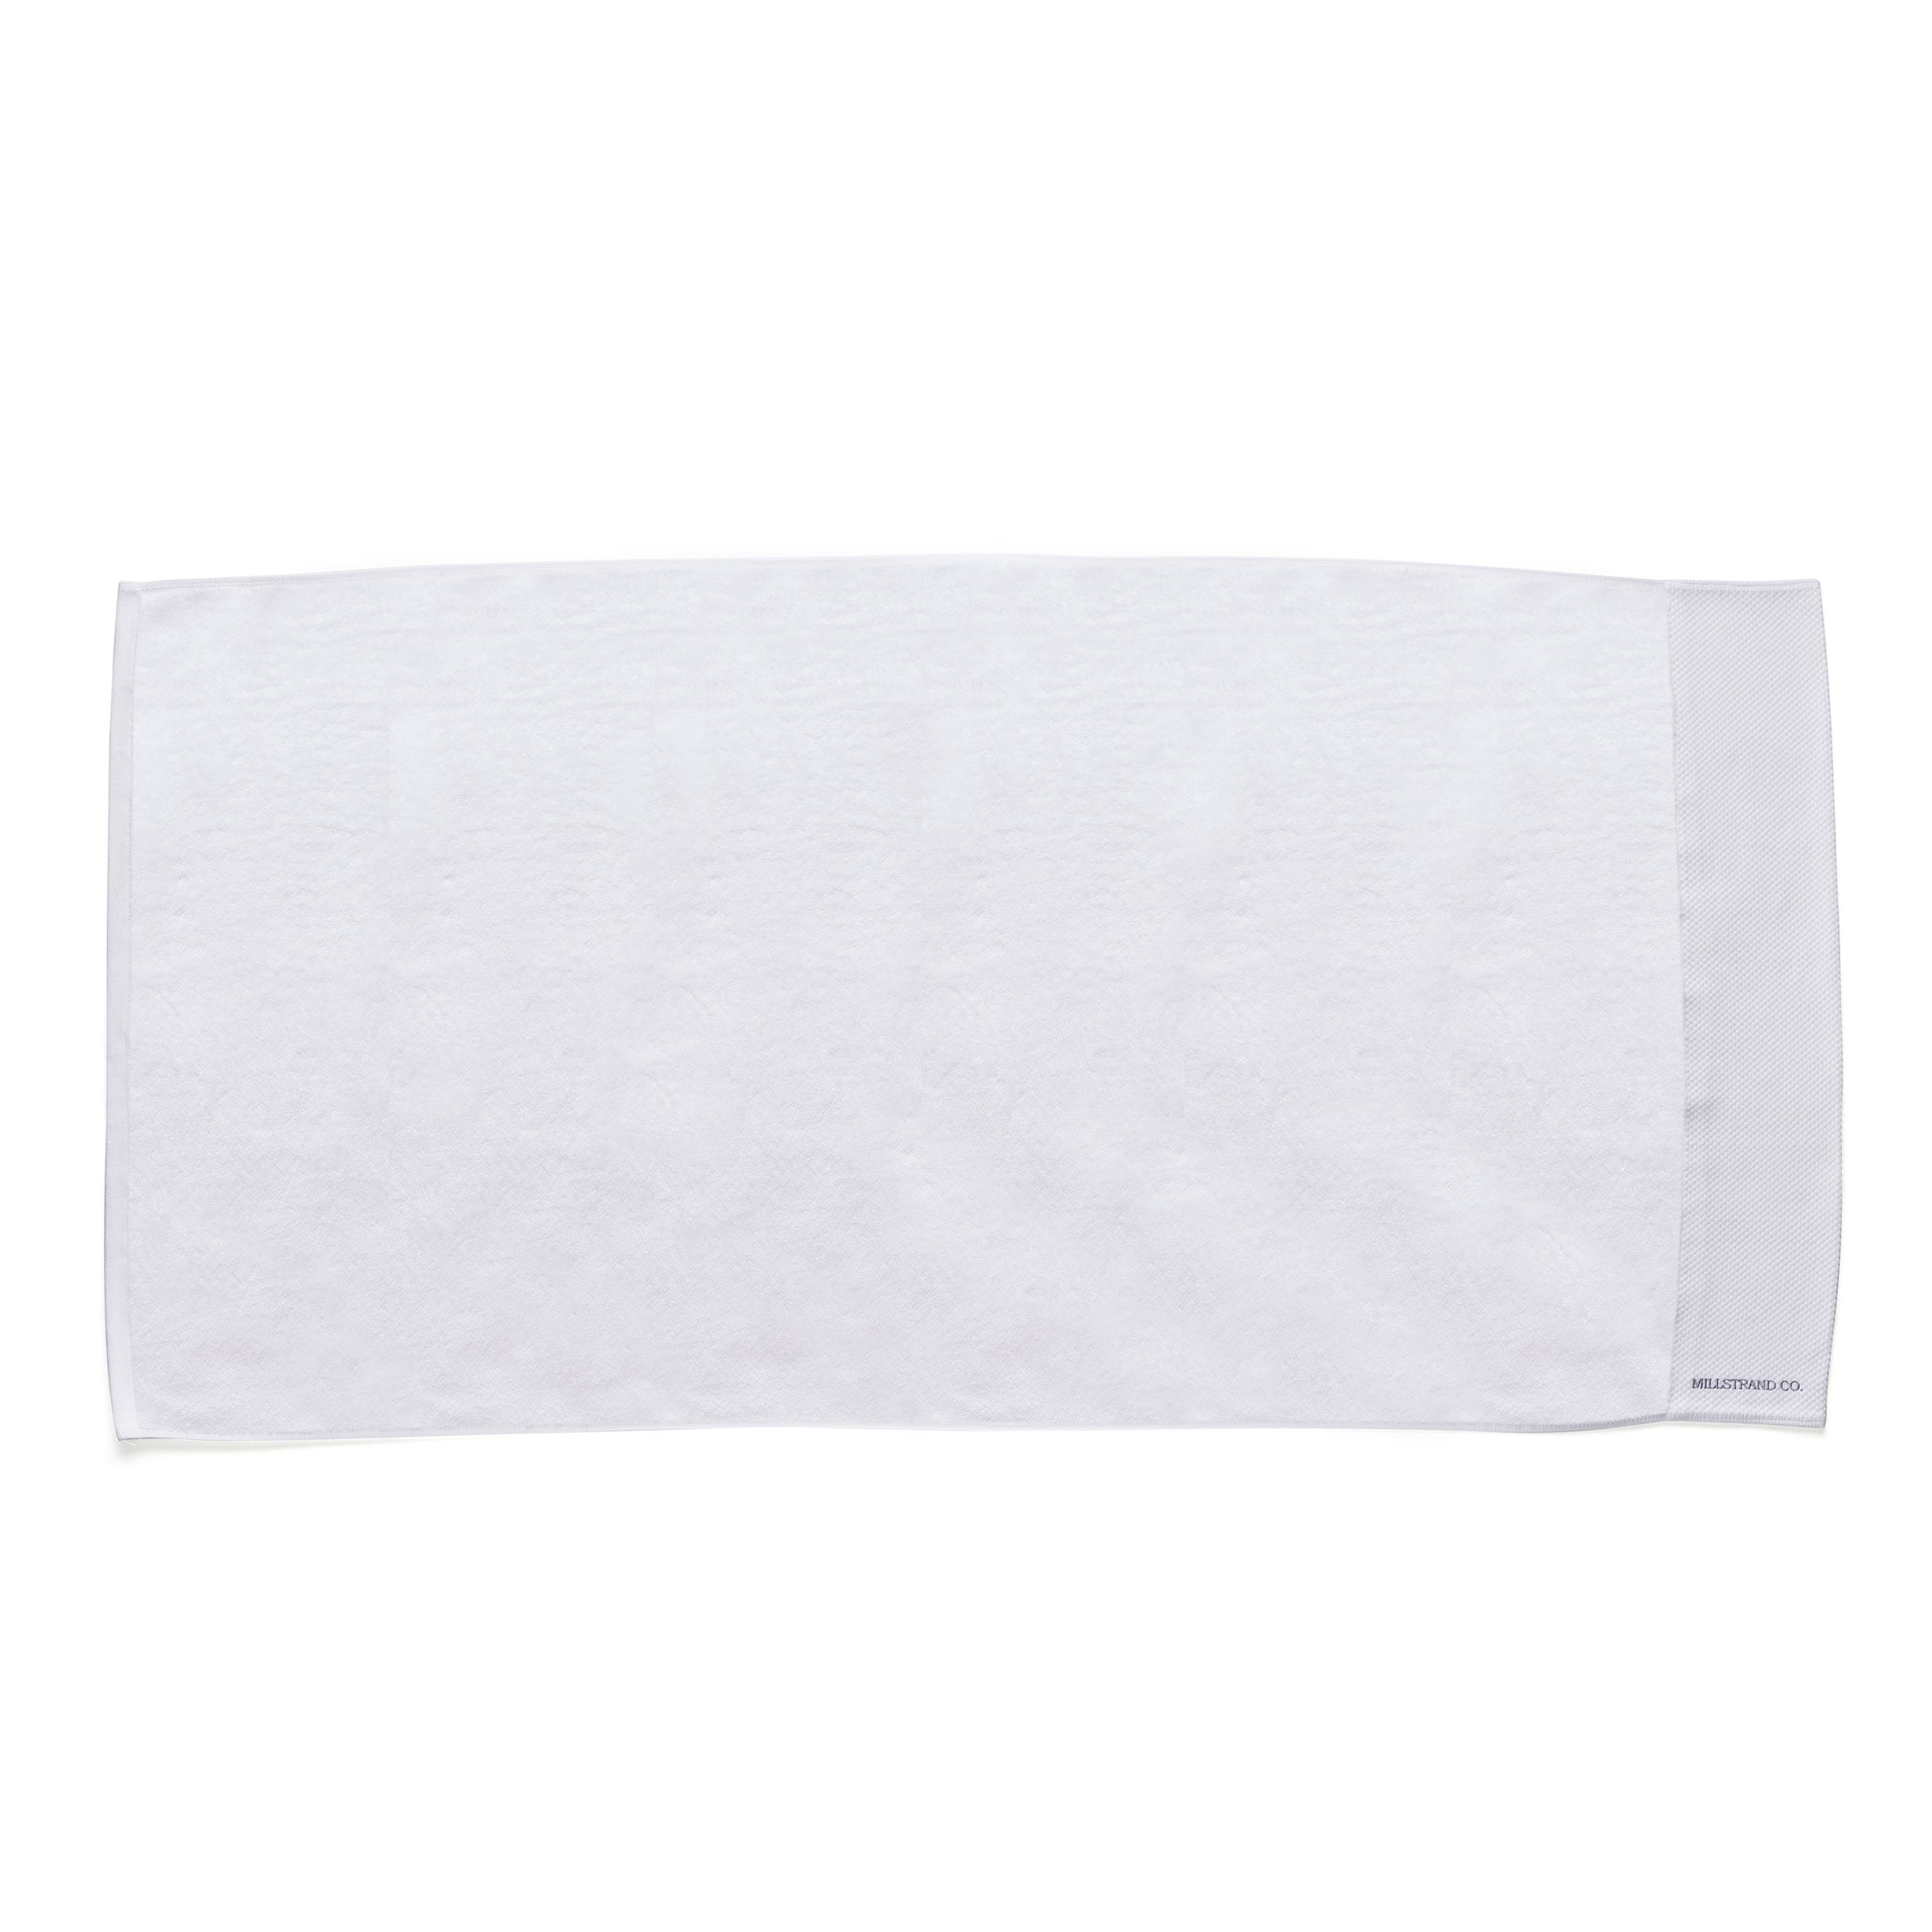 Millstrand Co. Lana Bath Towel Set in White Ivory